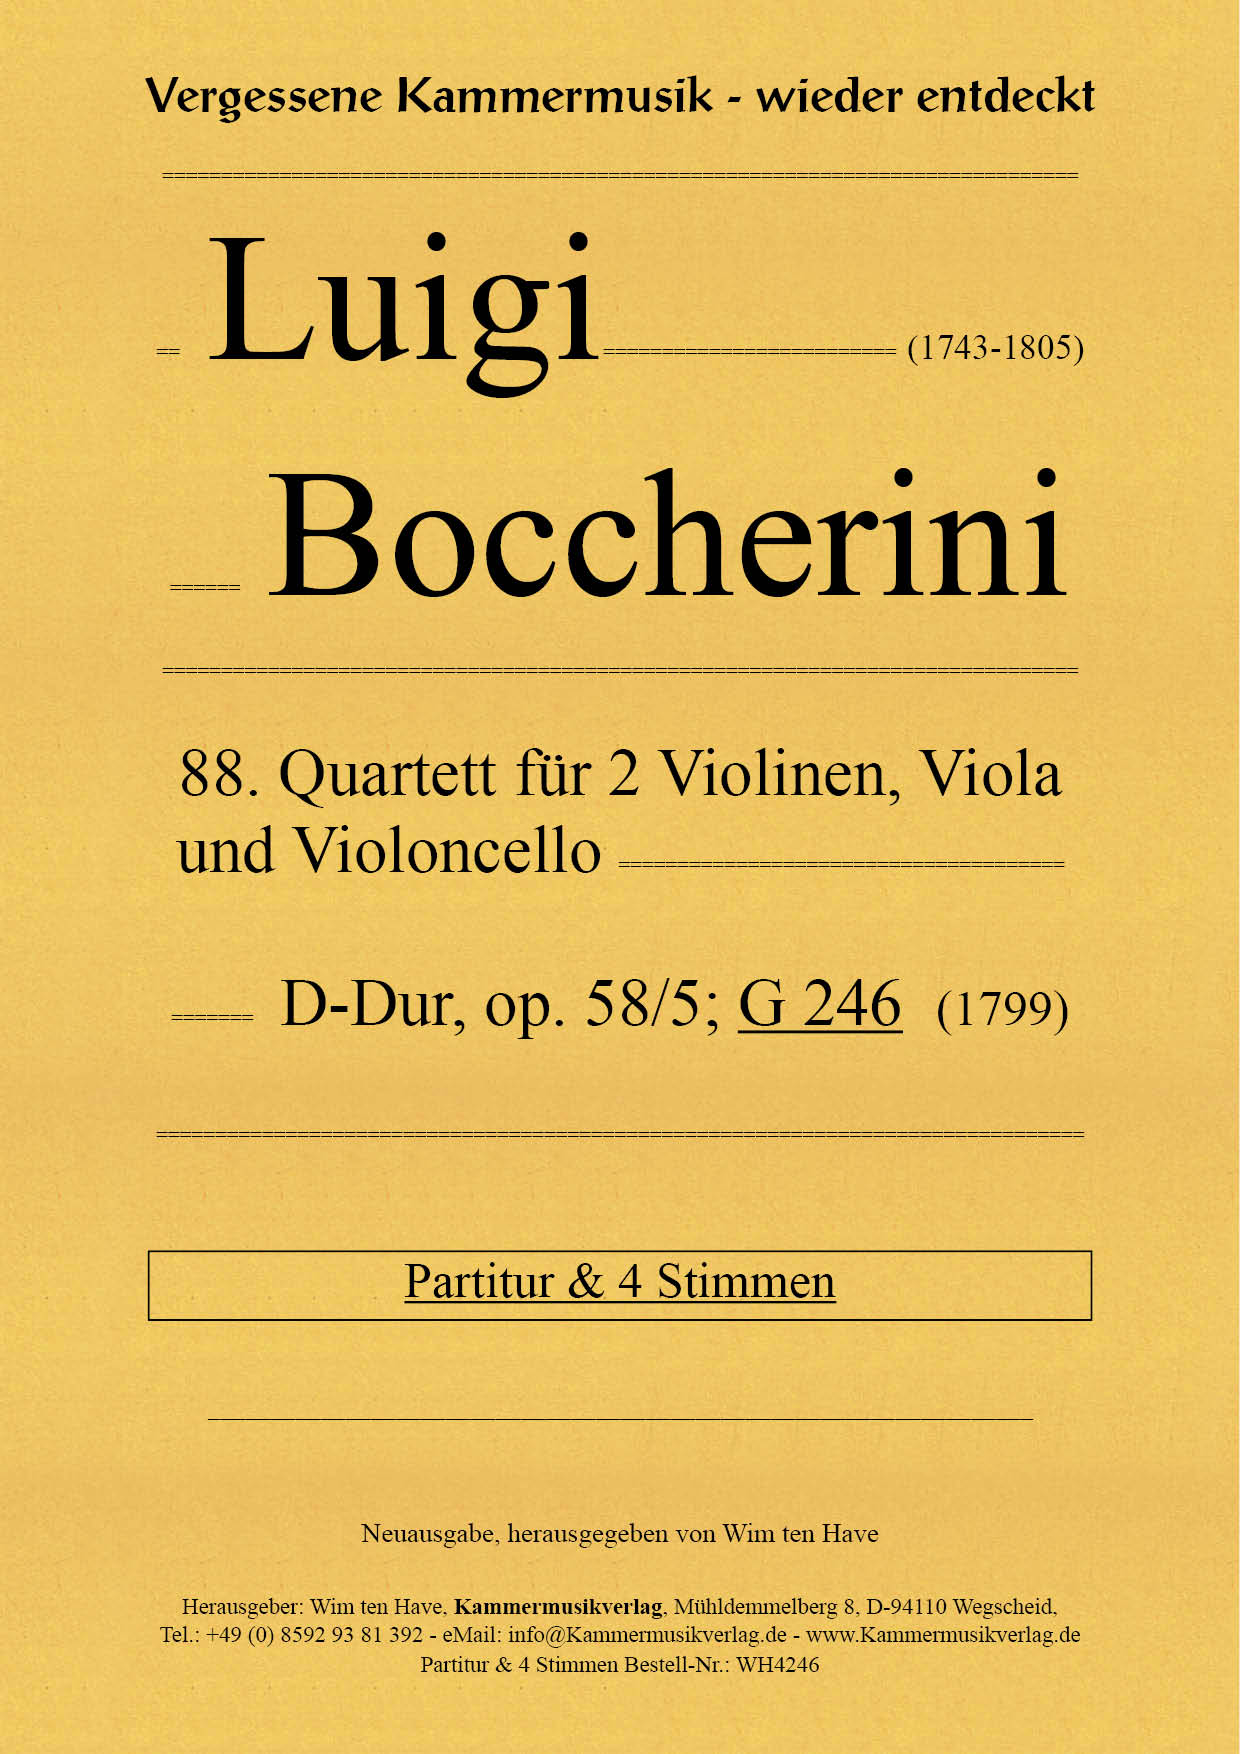 Boccherini: String Quartet in D Major, G 246, Op. 58, No. 5